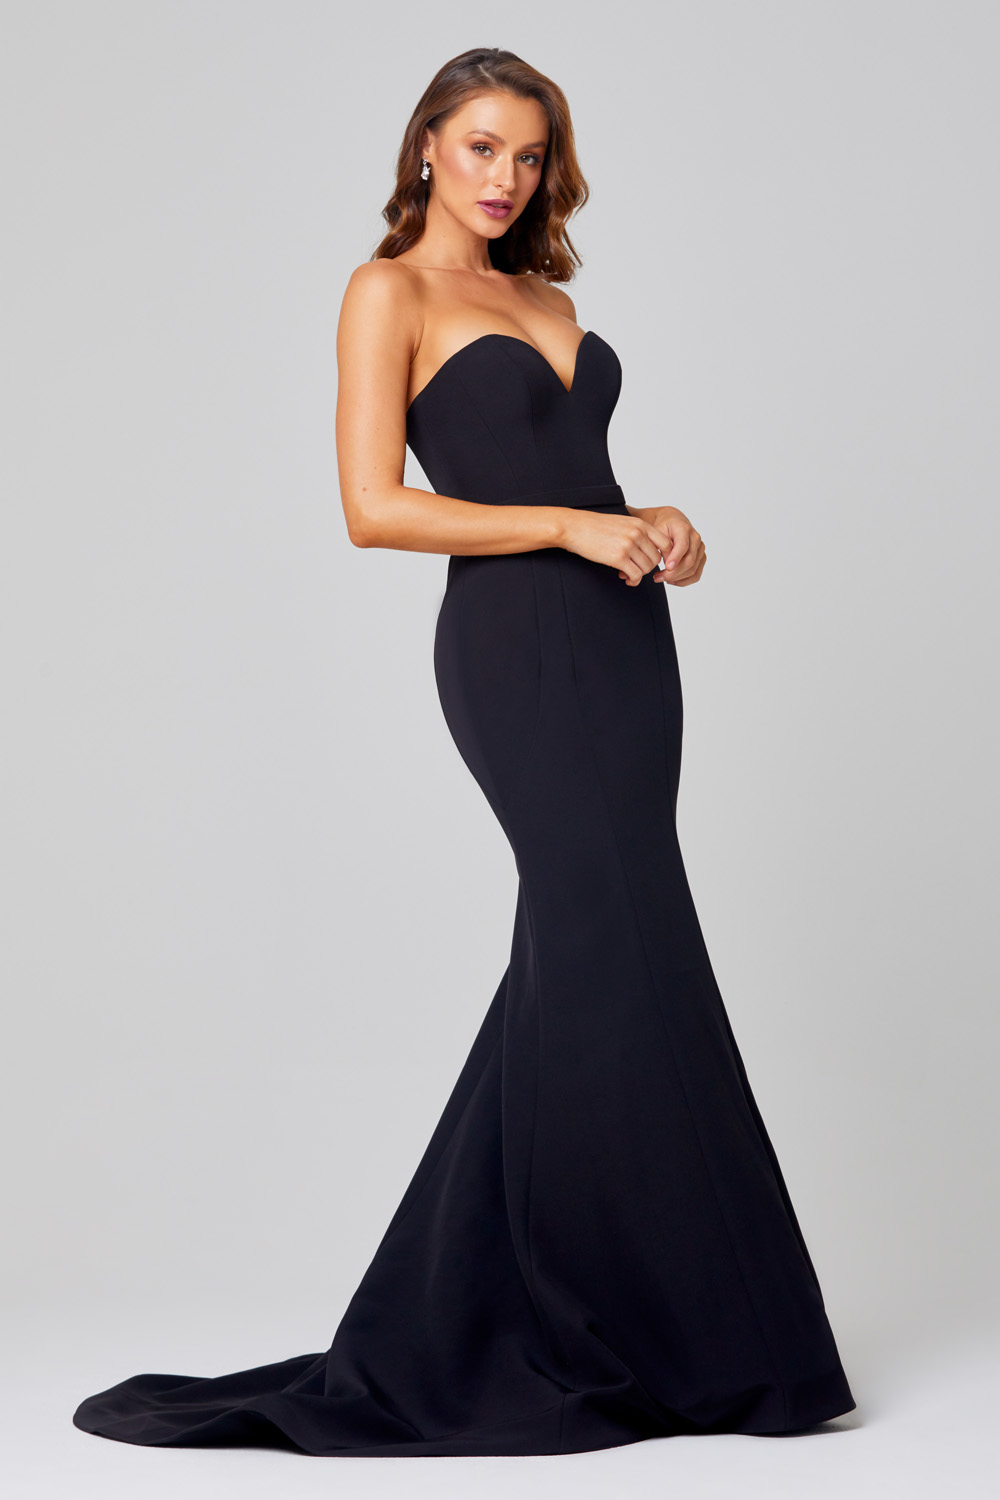 Lacie Evening Dress - PO886 - Tania Olsen Designs